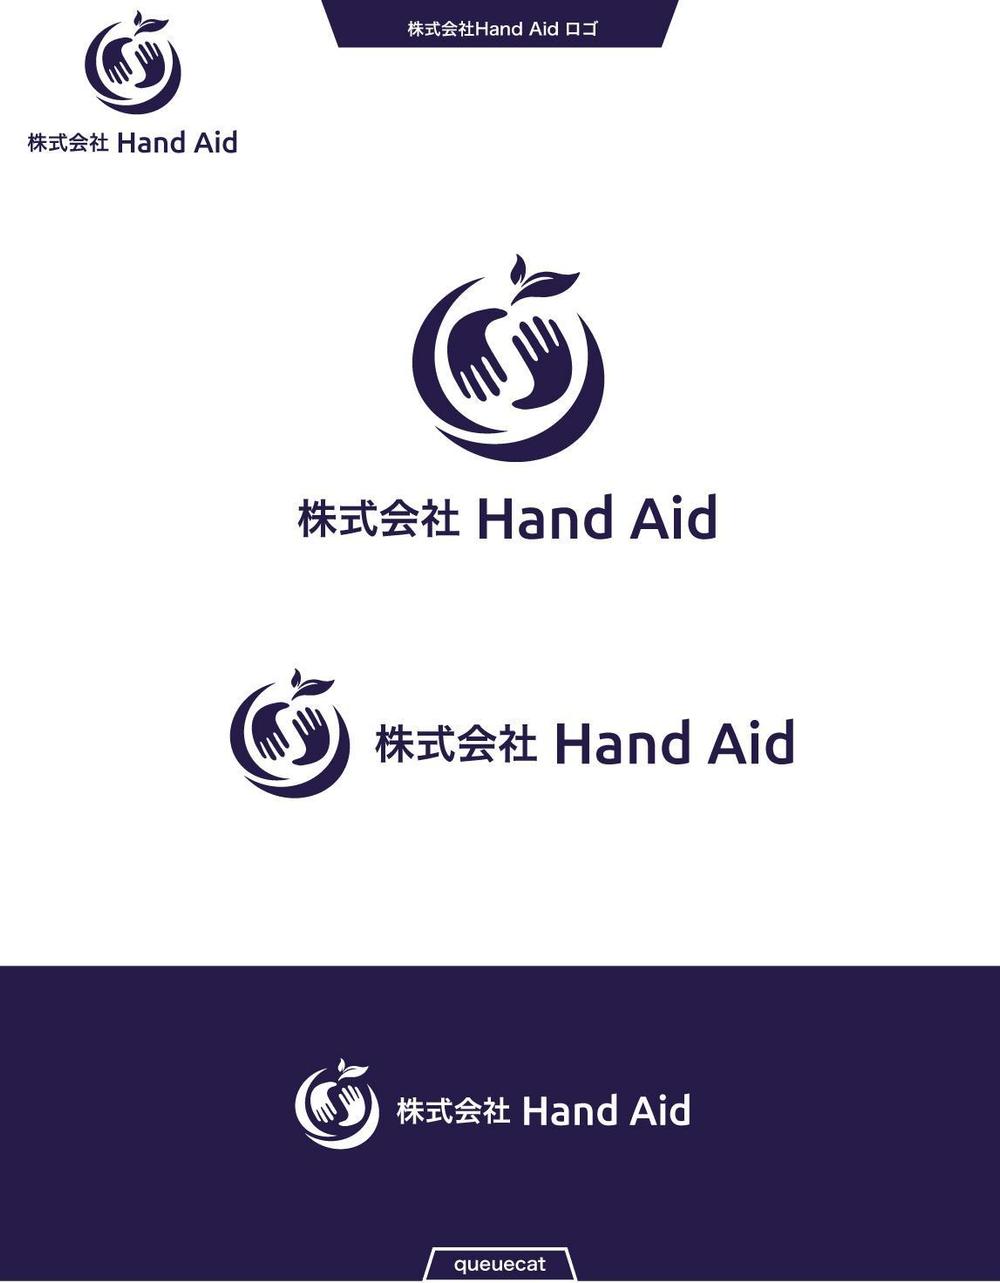 Hand Aid2_1.jpg